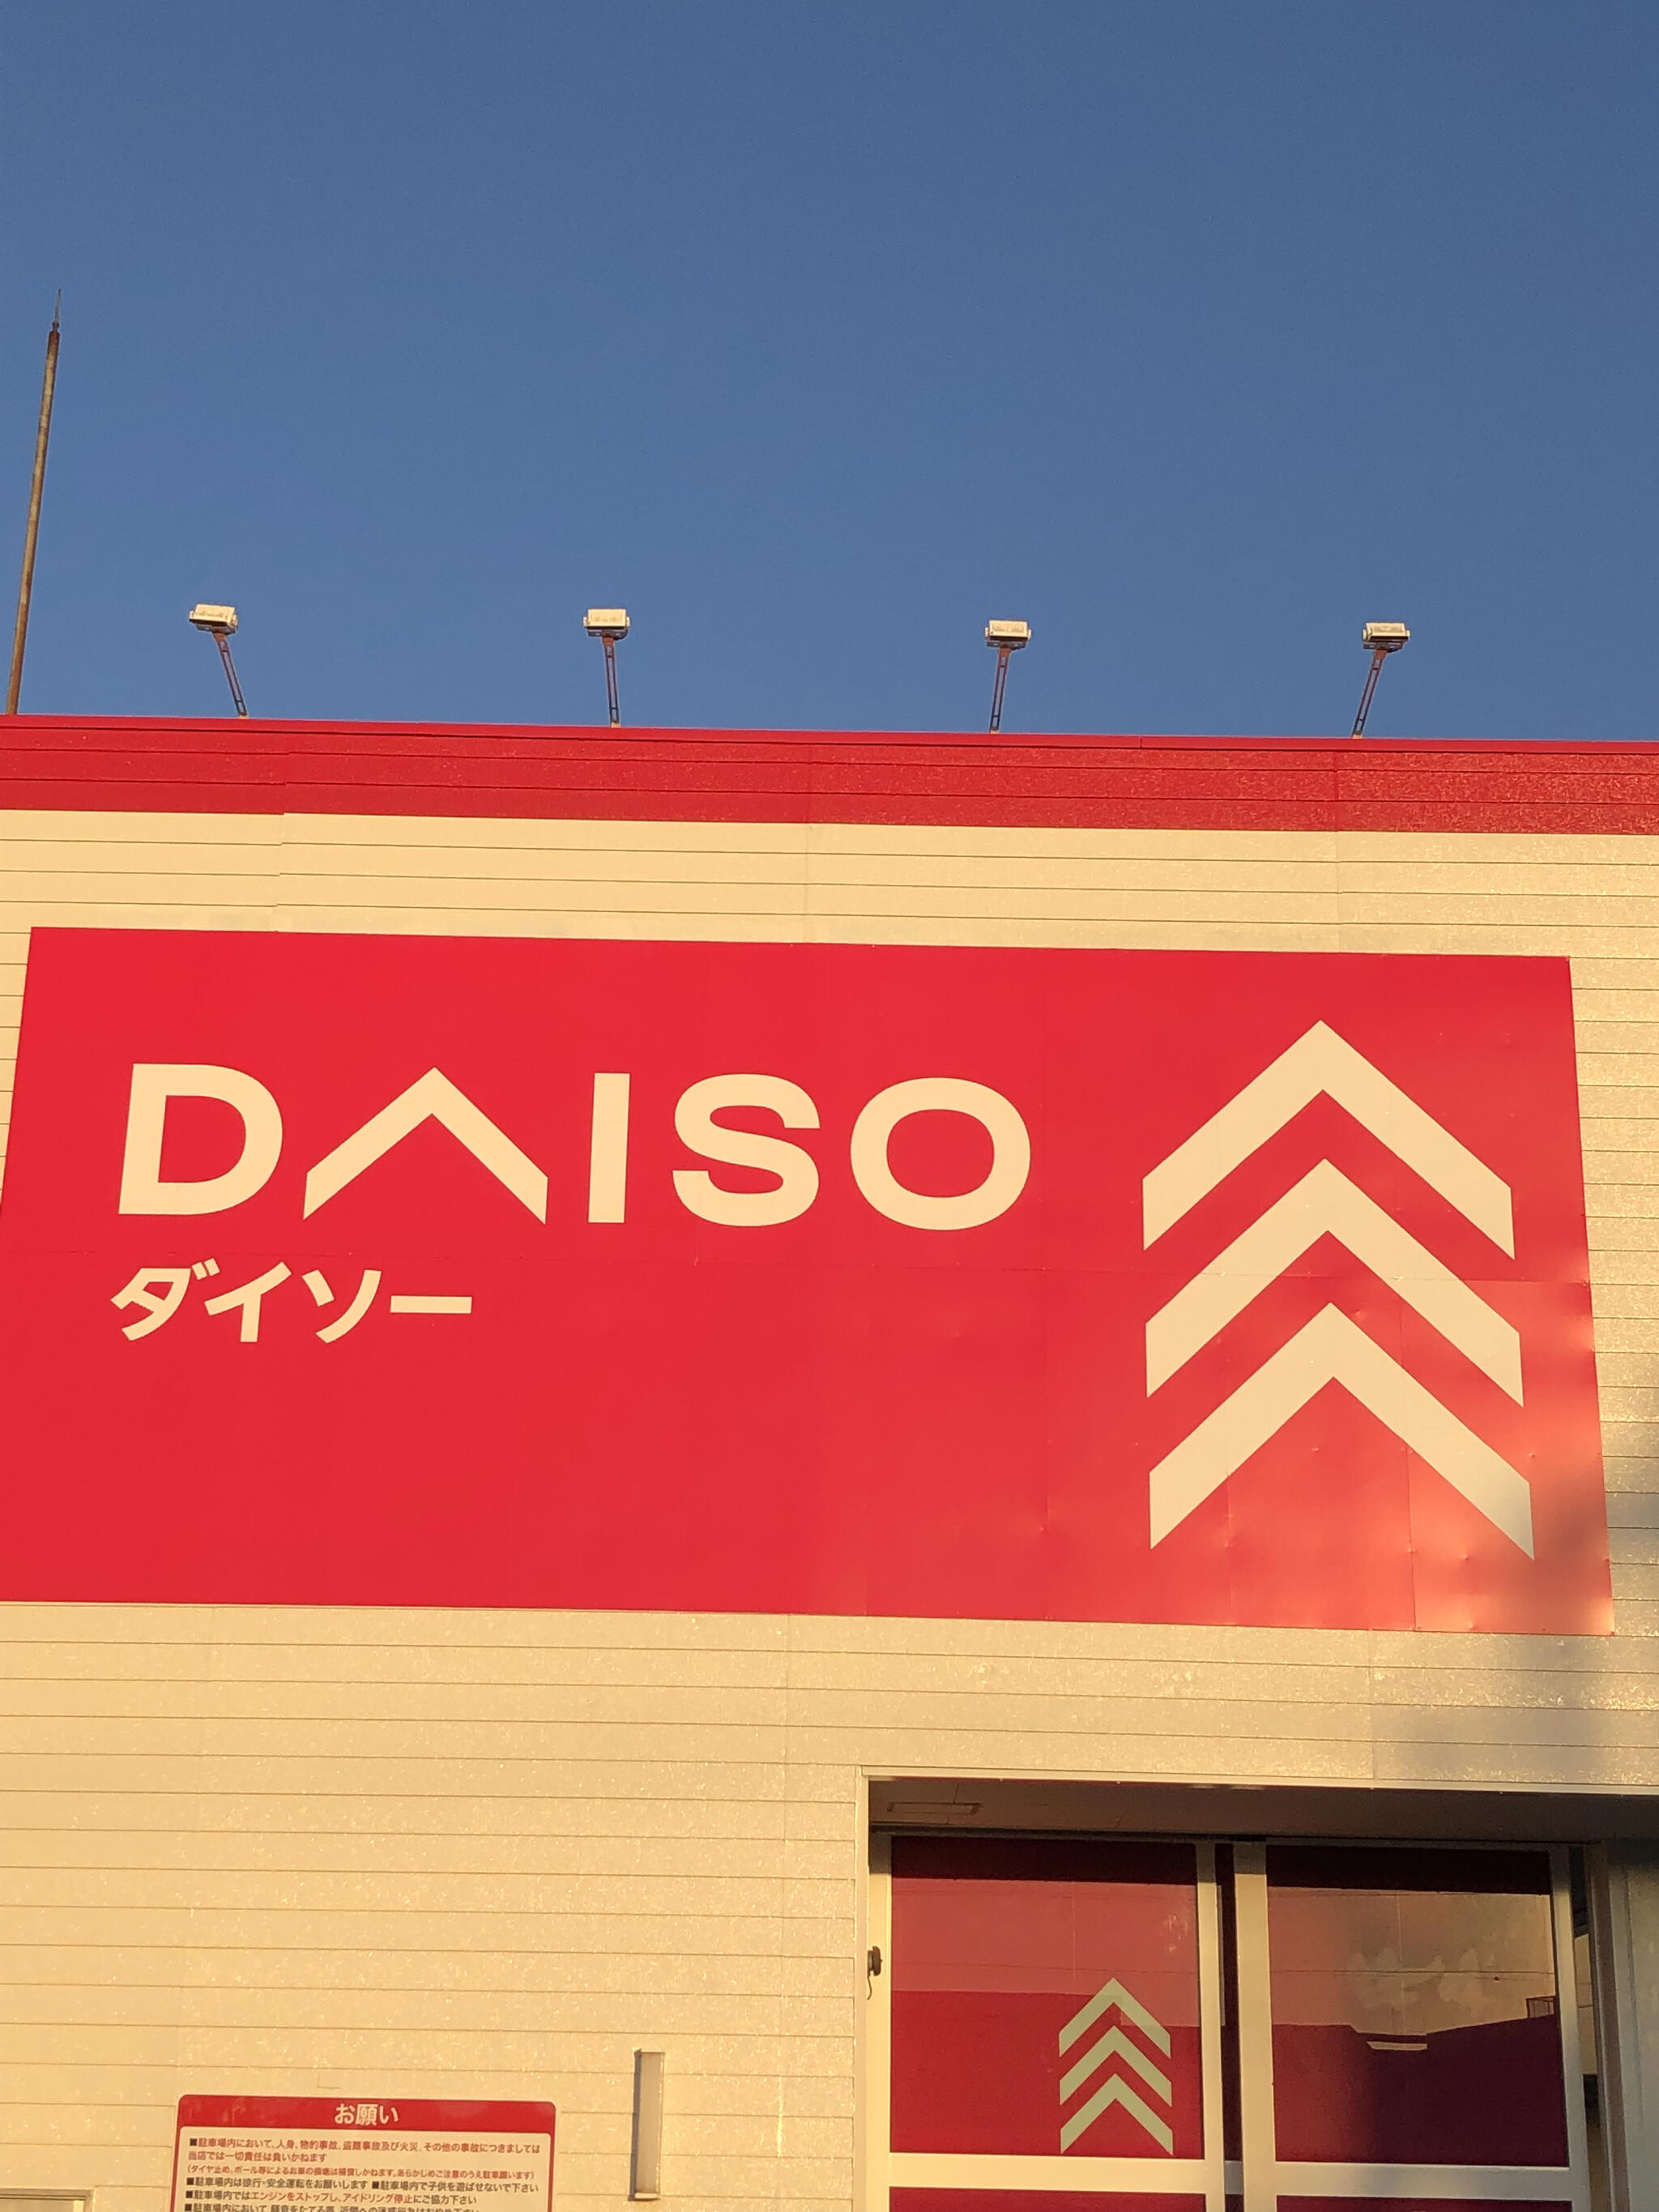 DAISO 水戸見和店の代表写真2